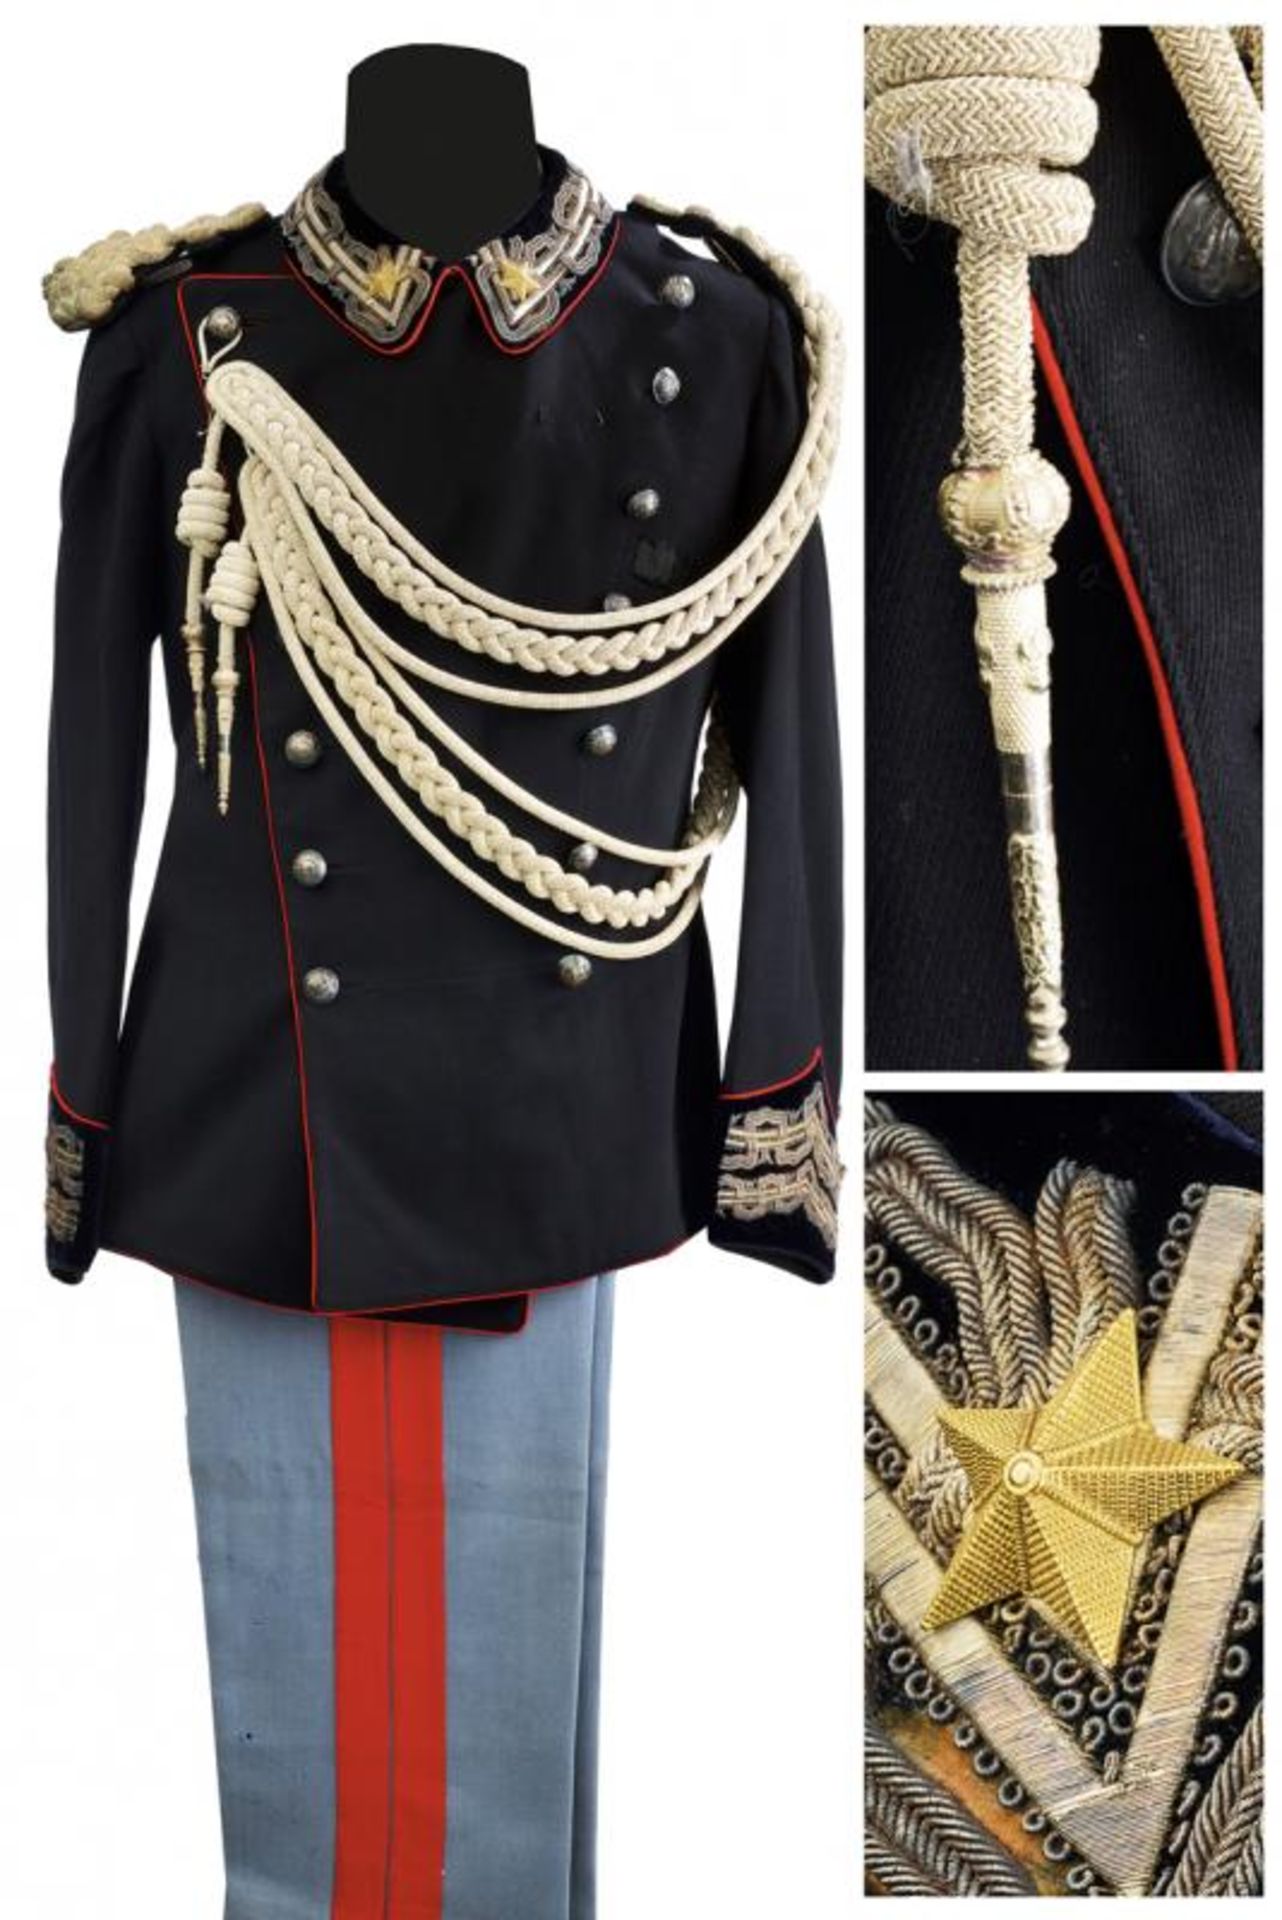 A lieutenant general's uniform